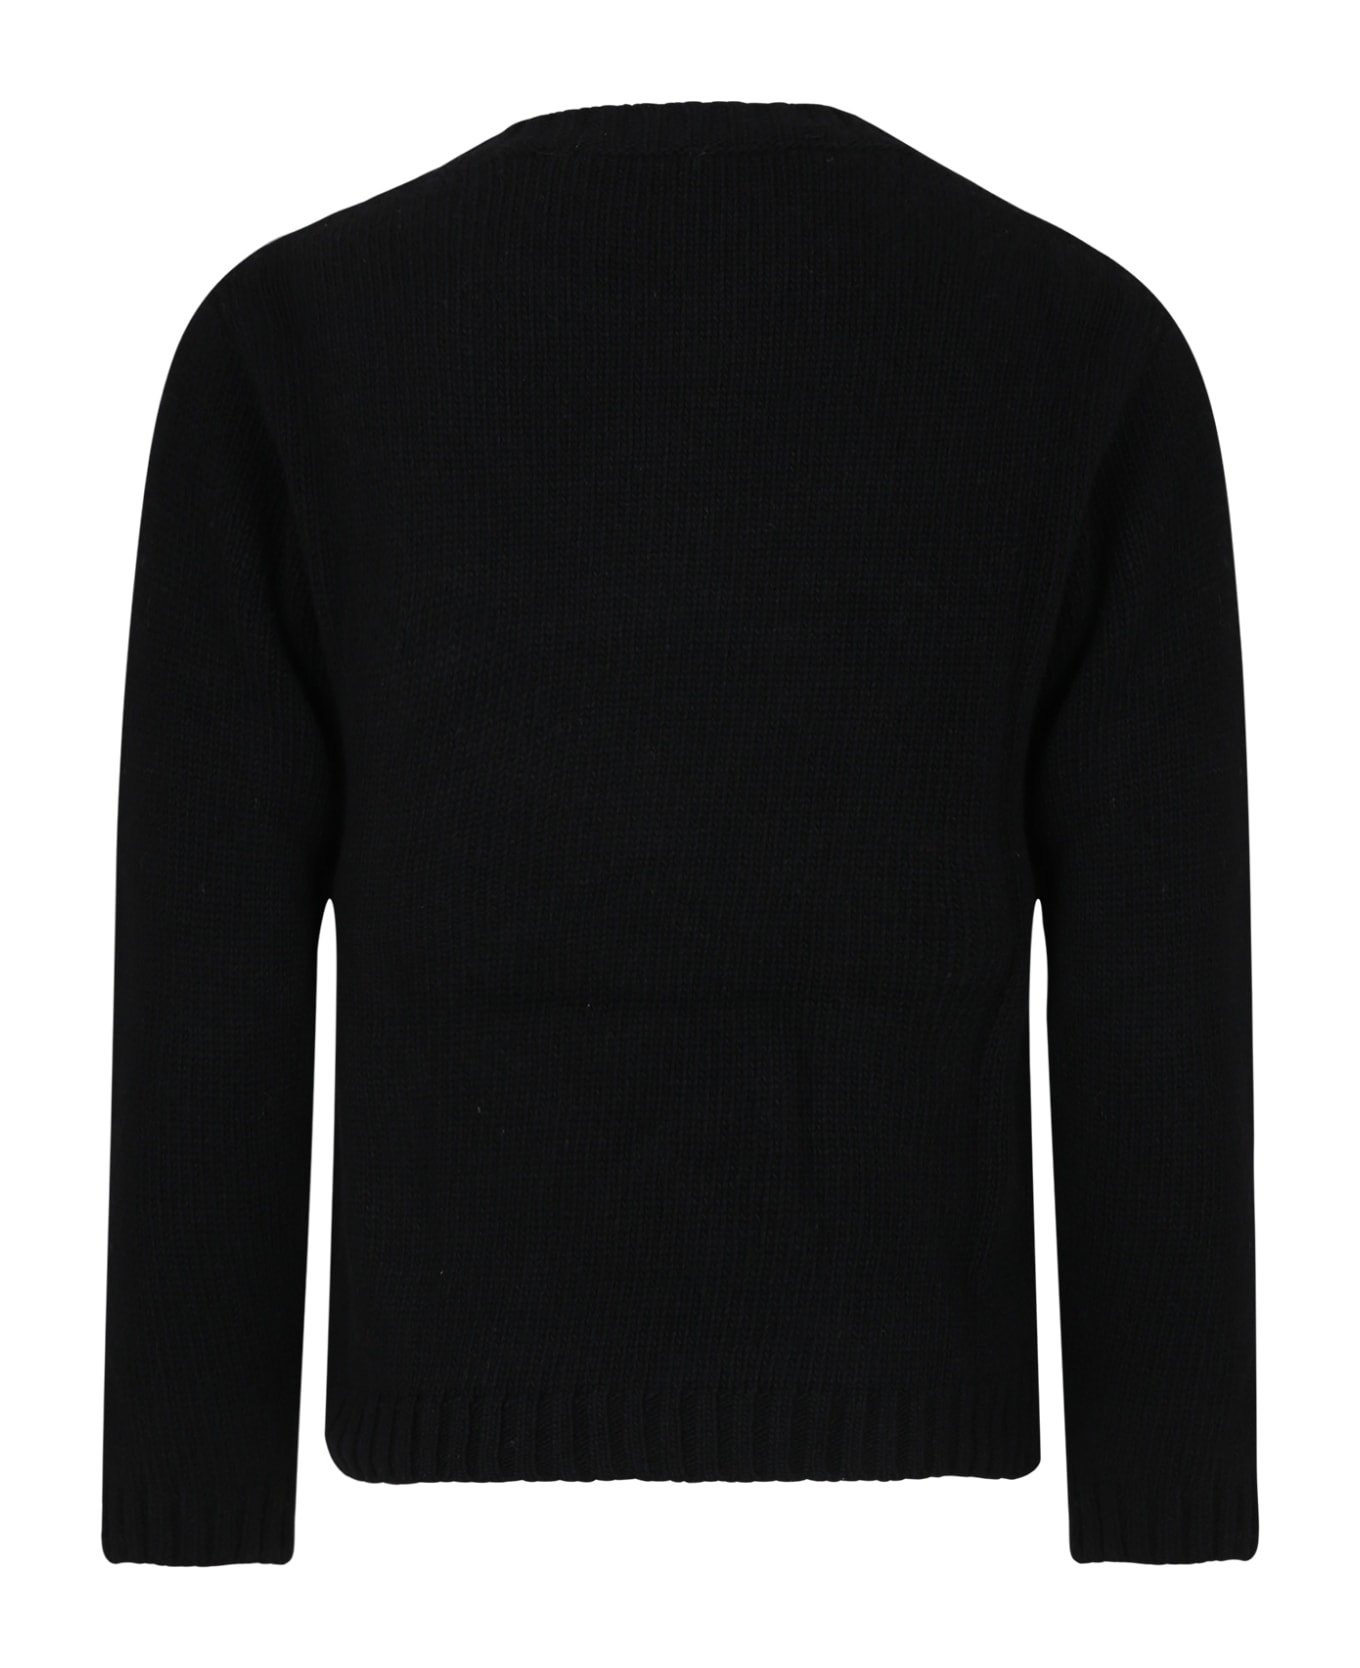 Philosophy di Lorenzo Serafini Kids Black Sweater For Girl With Logo - Black